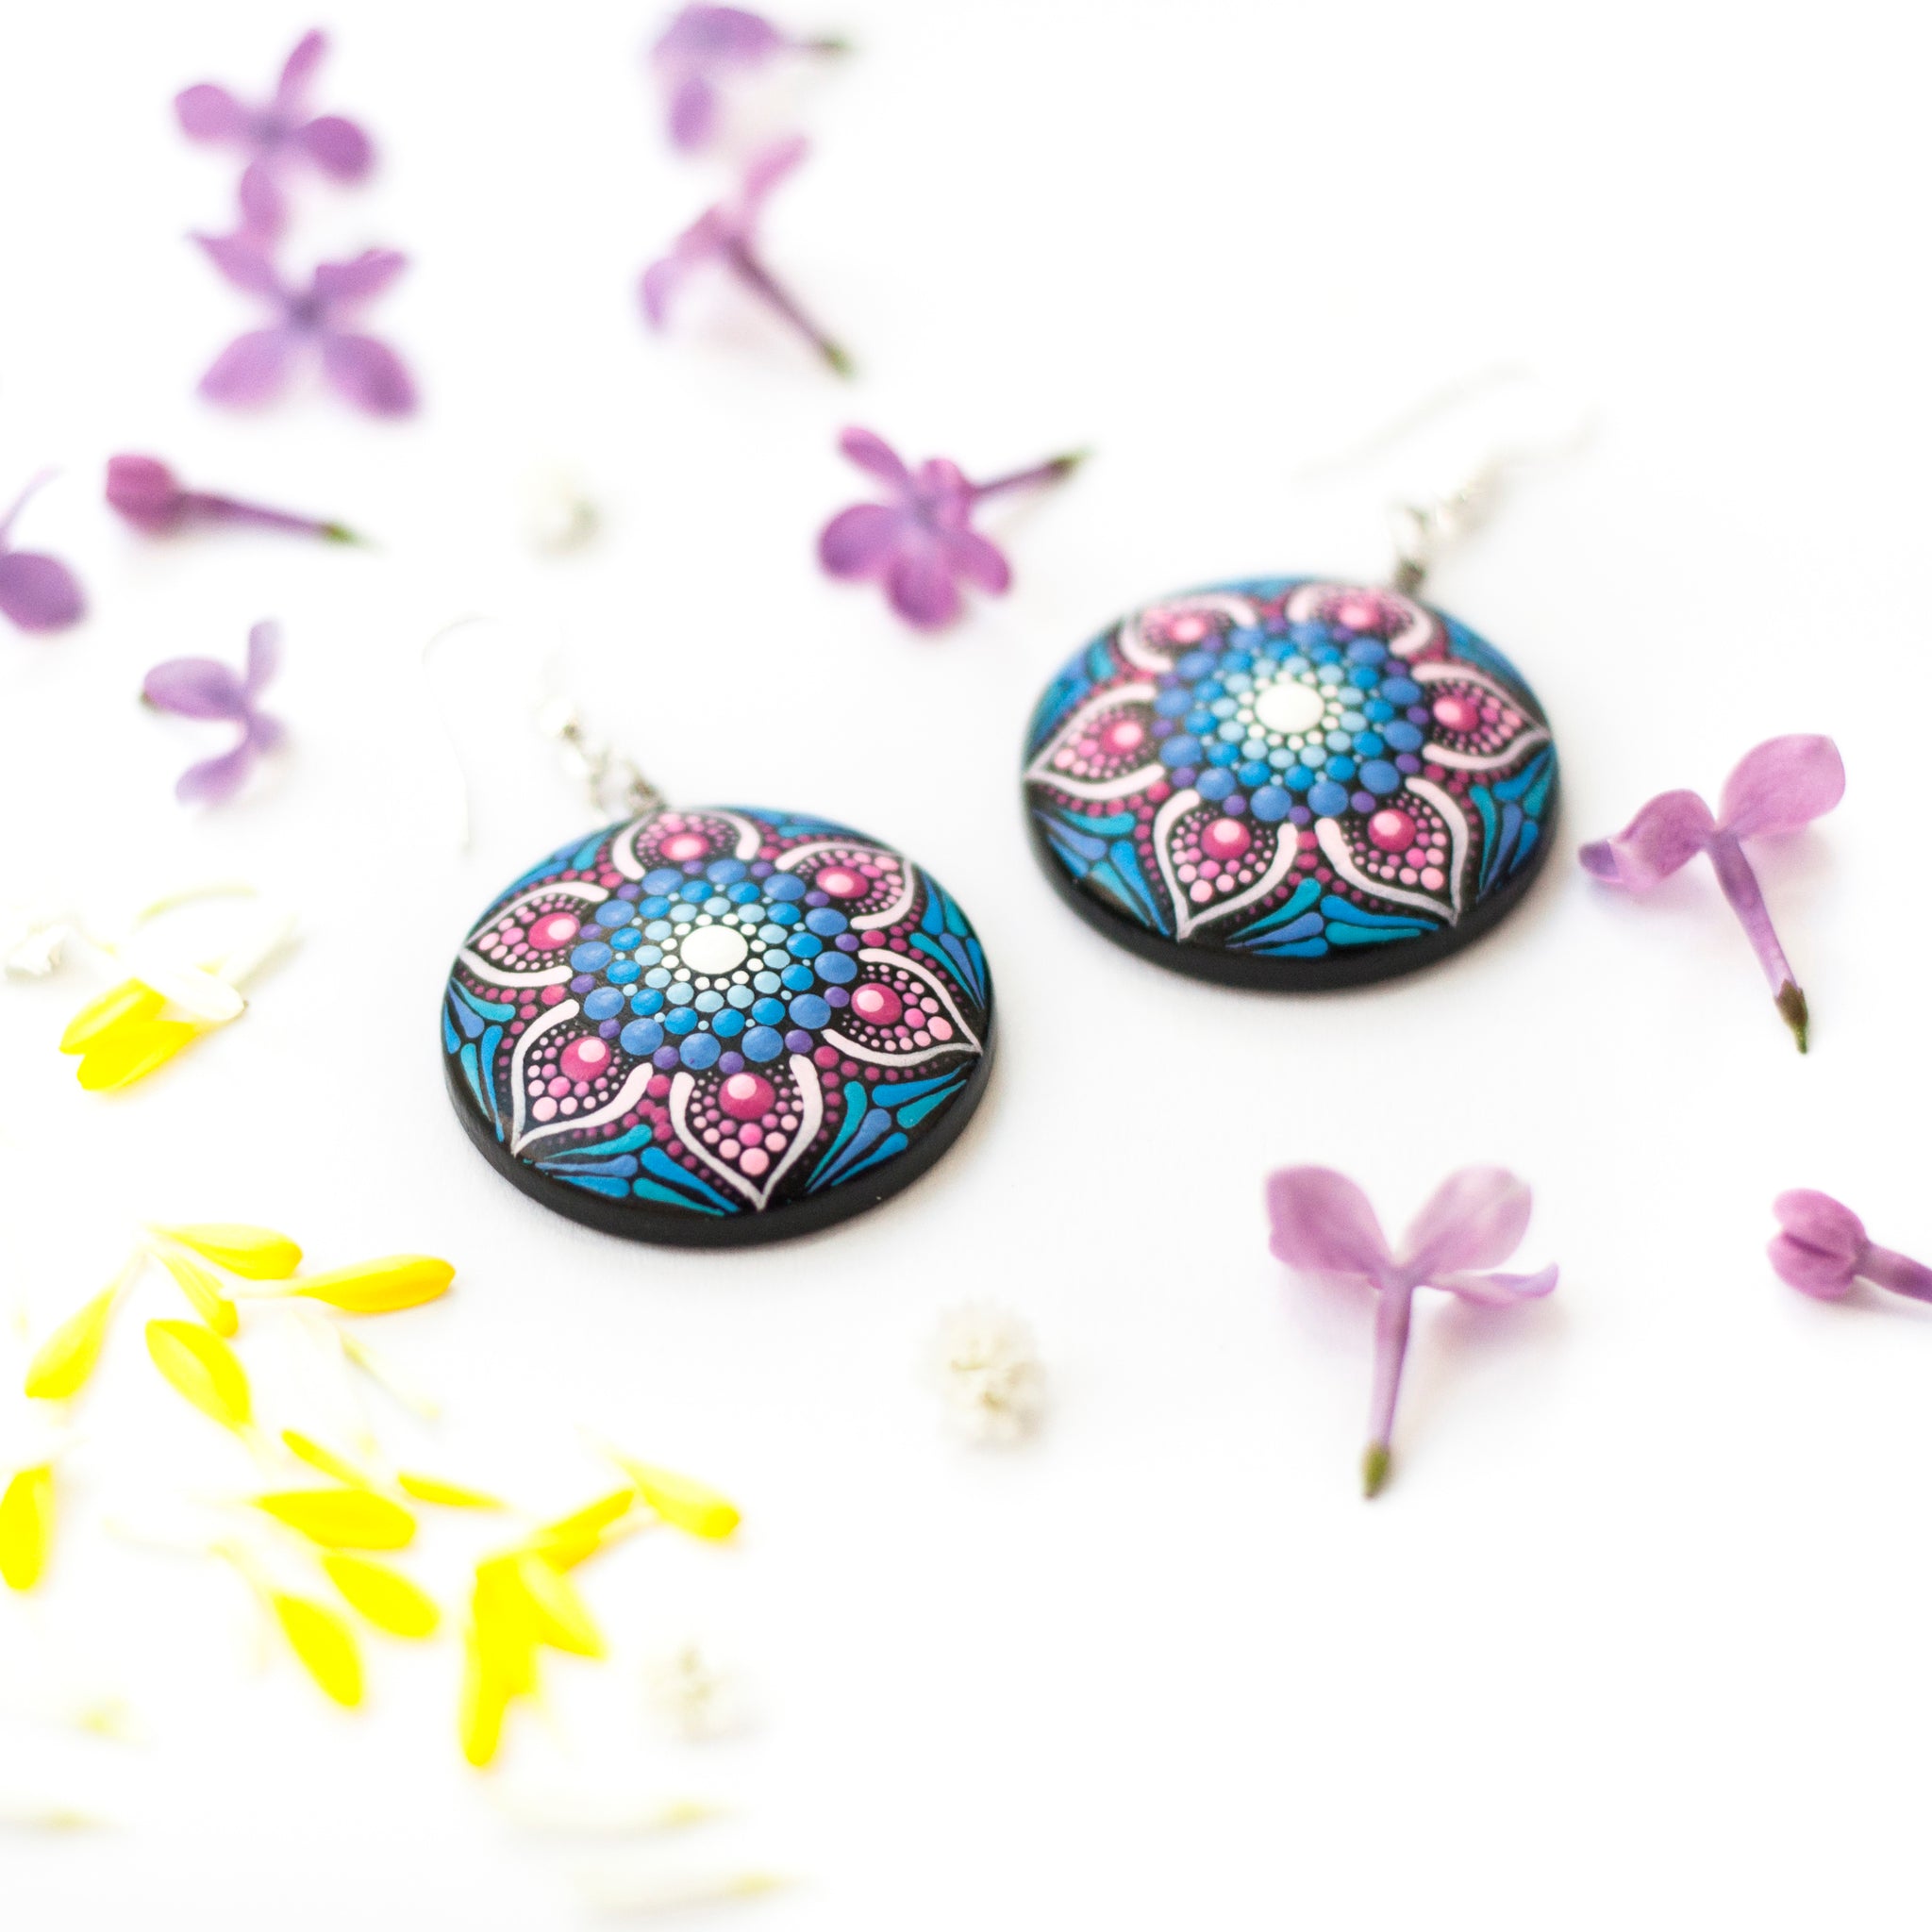 Mandala Earrings "Blue Skies Lilac"